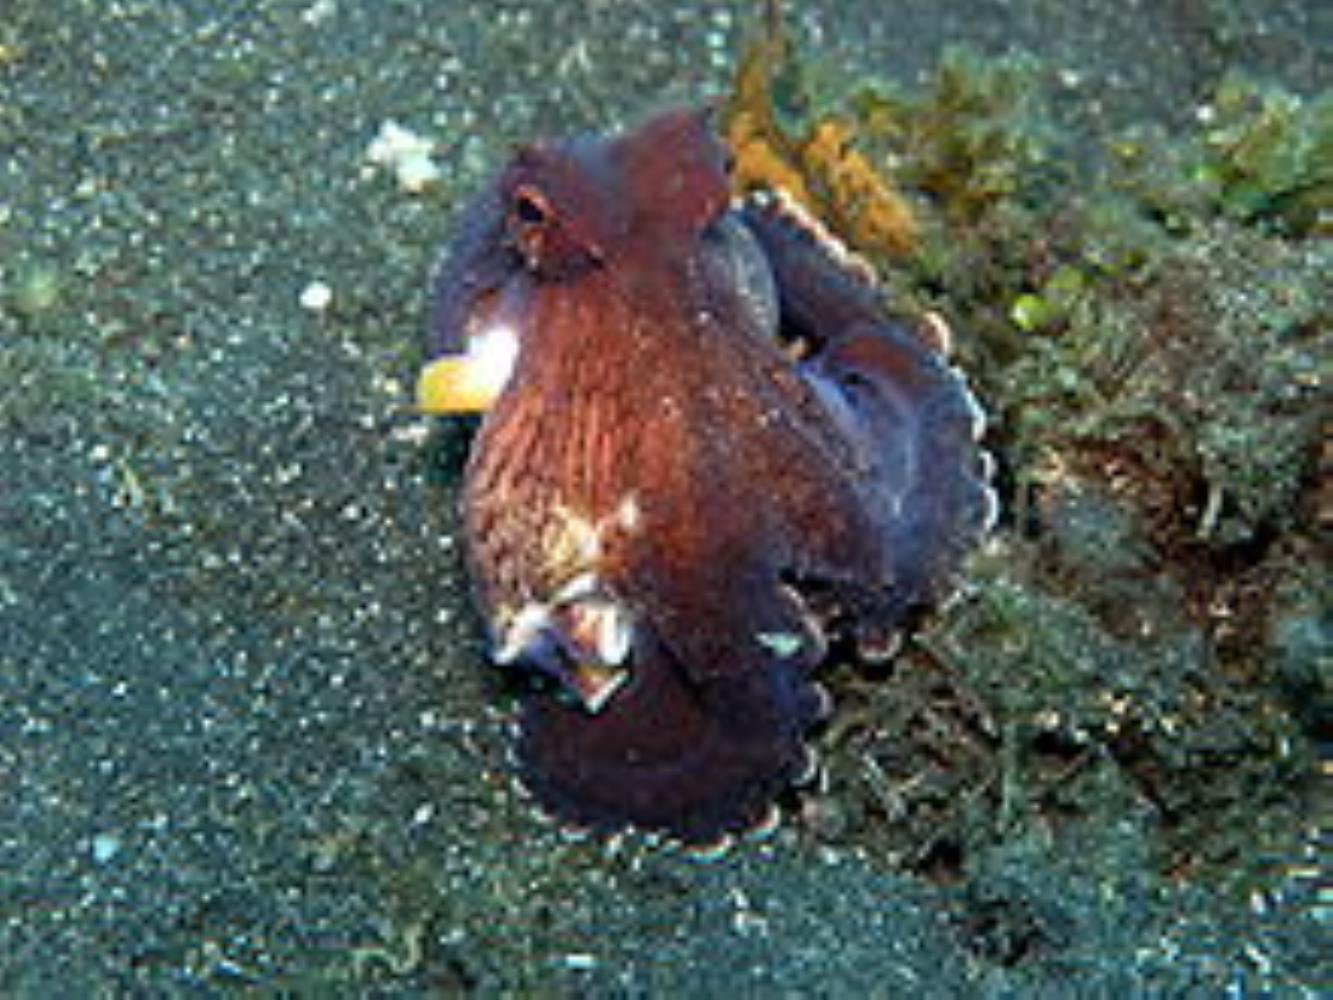 Coconut Octopus